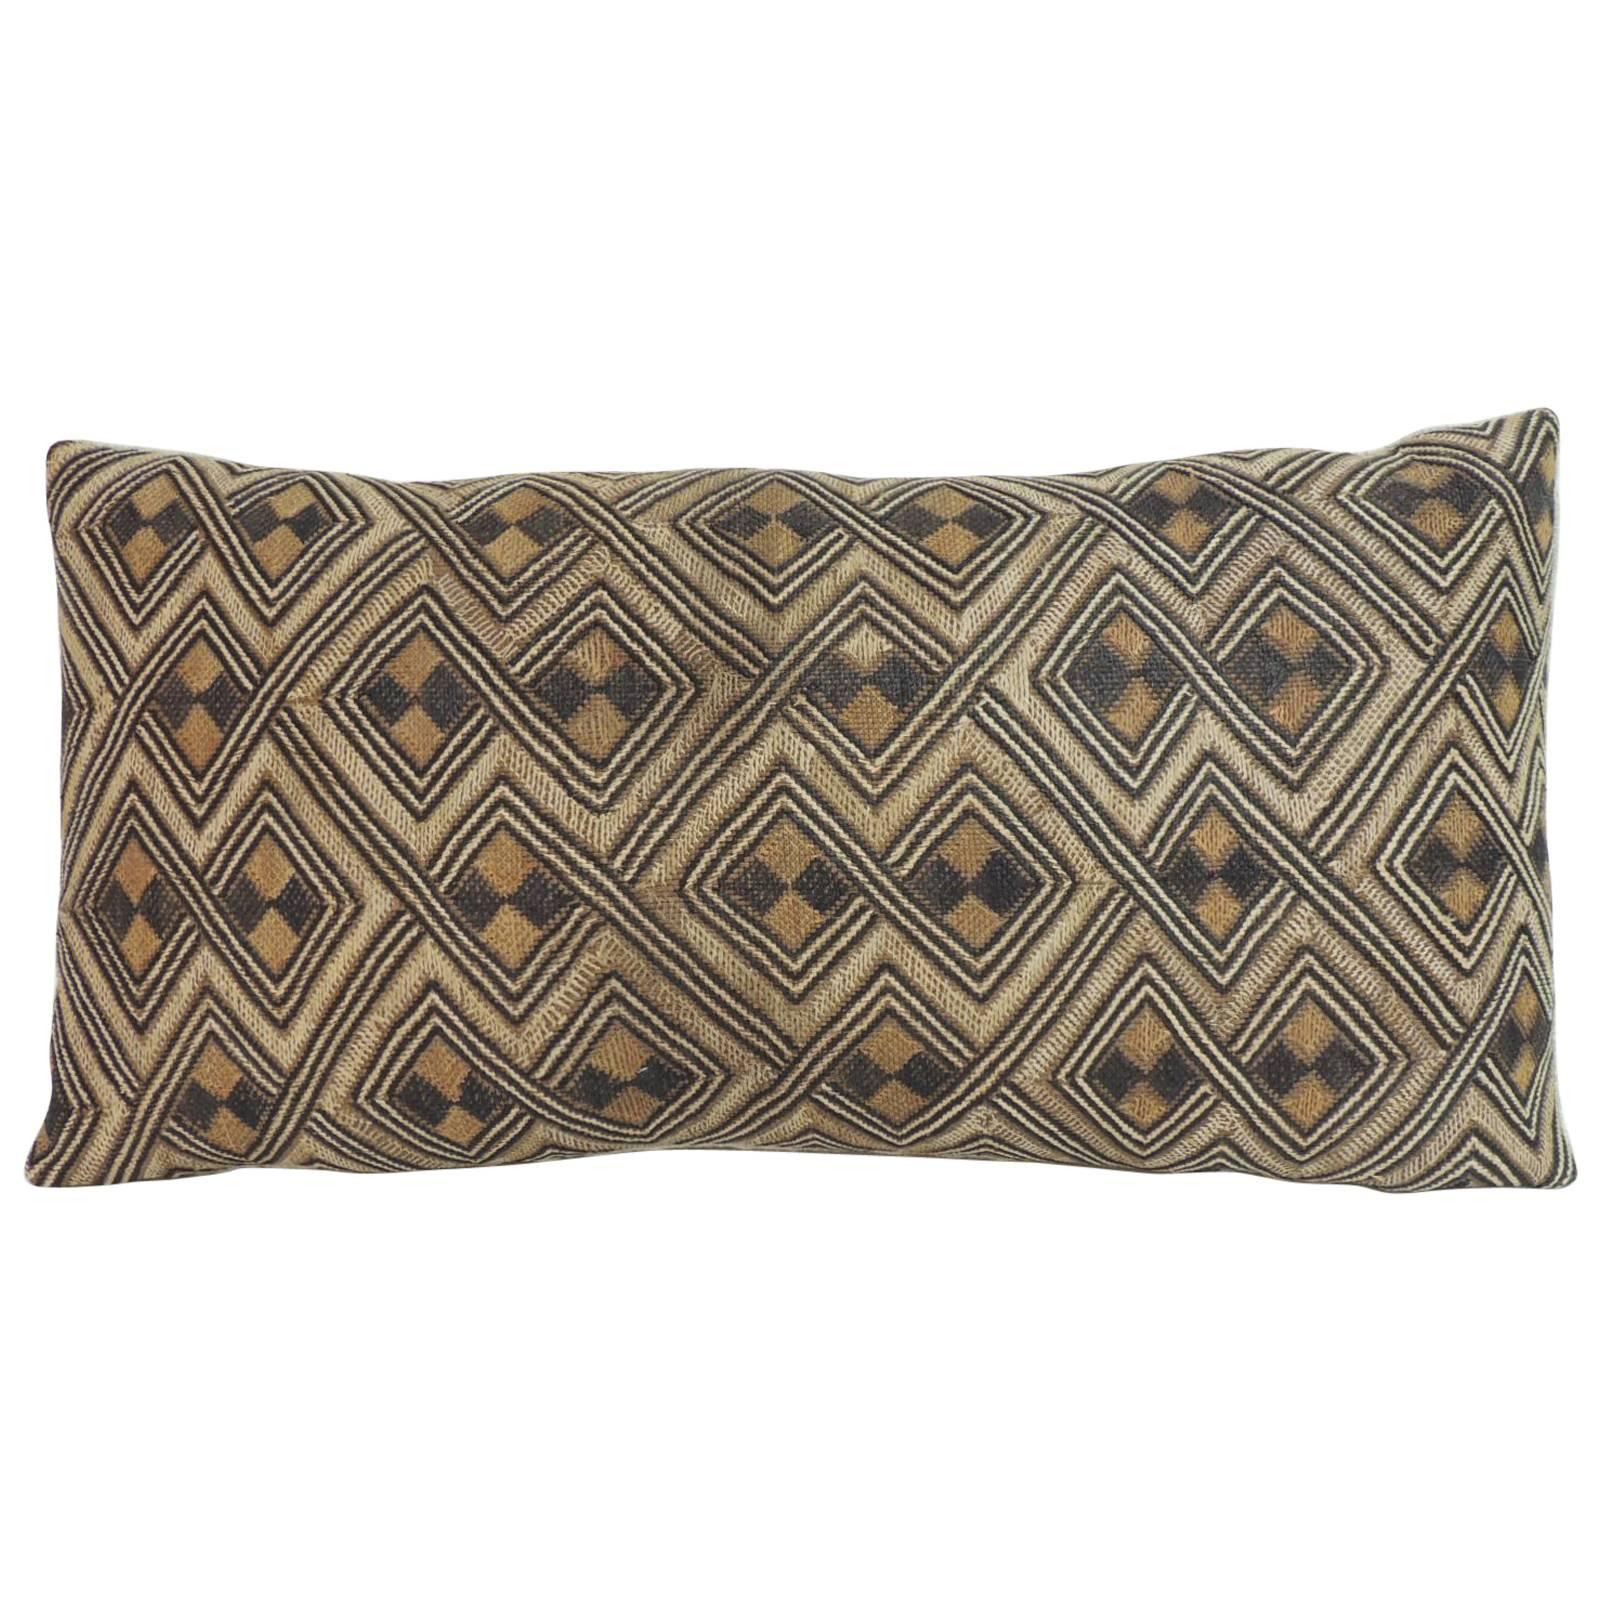 Vintage Handwoven Camel and Brown African Tribal Decorative Lumbar Pillow